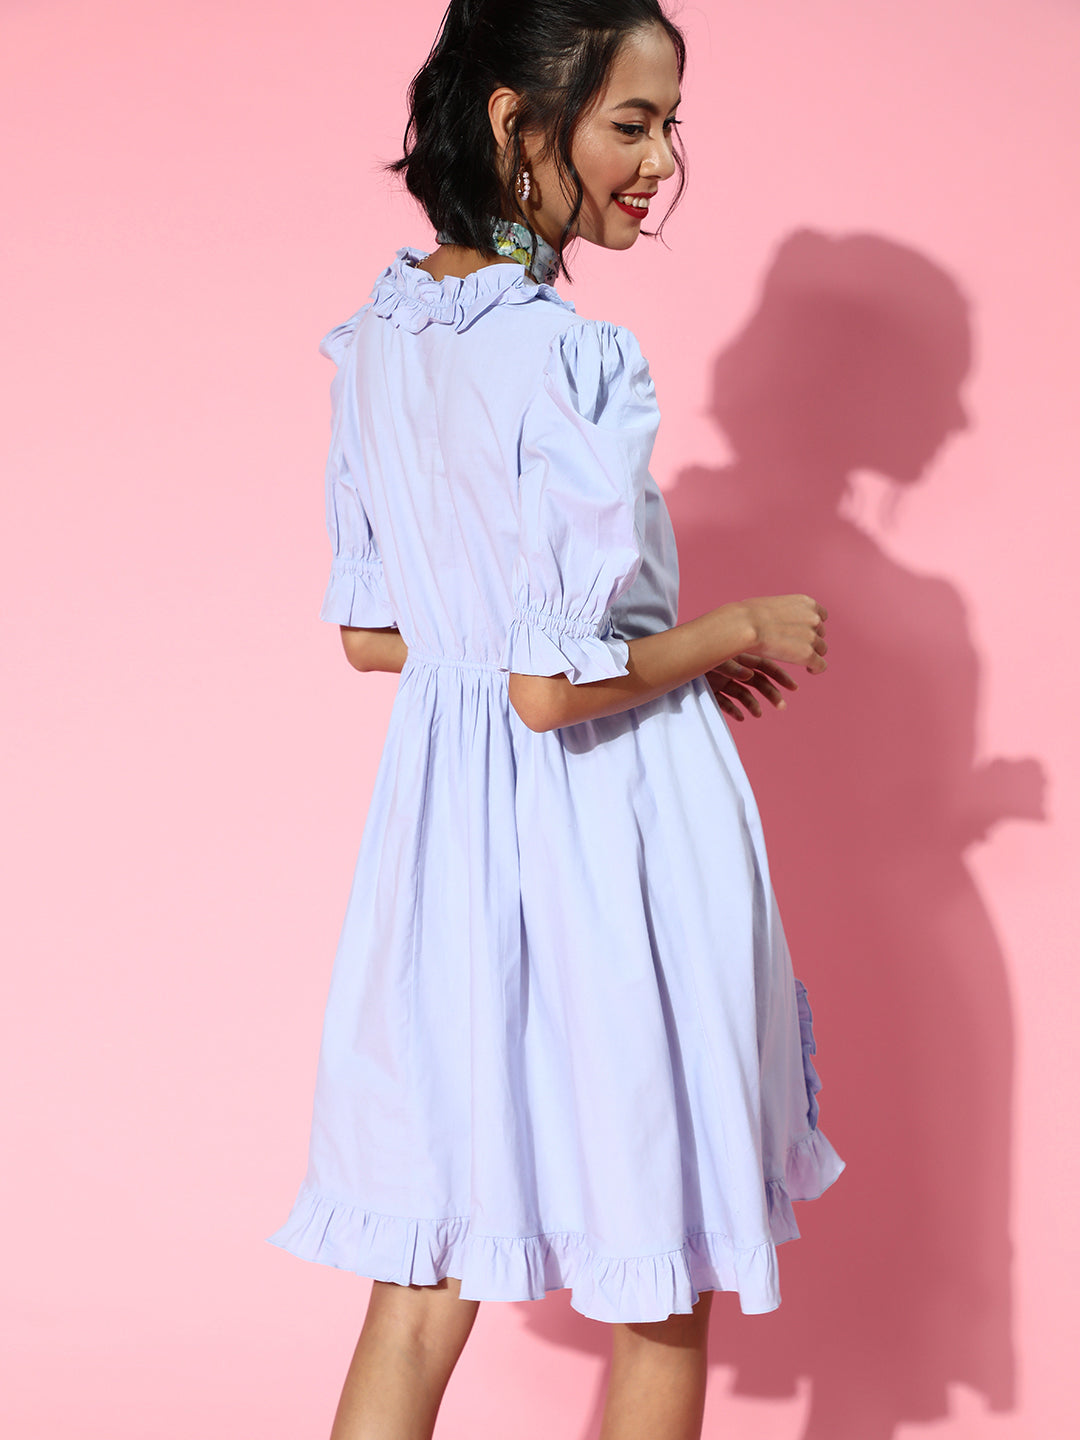 Athena lite blue cotton ruffle and Front BowDetail Dress - Athena Lifestyle